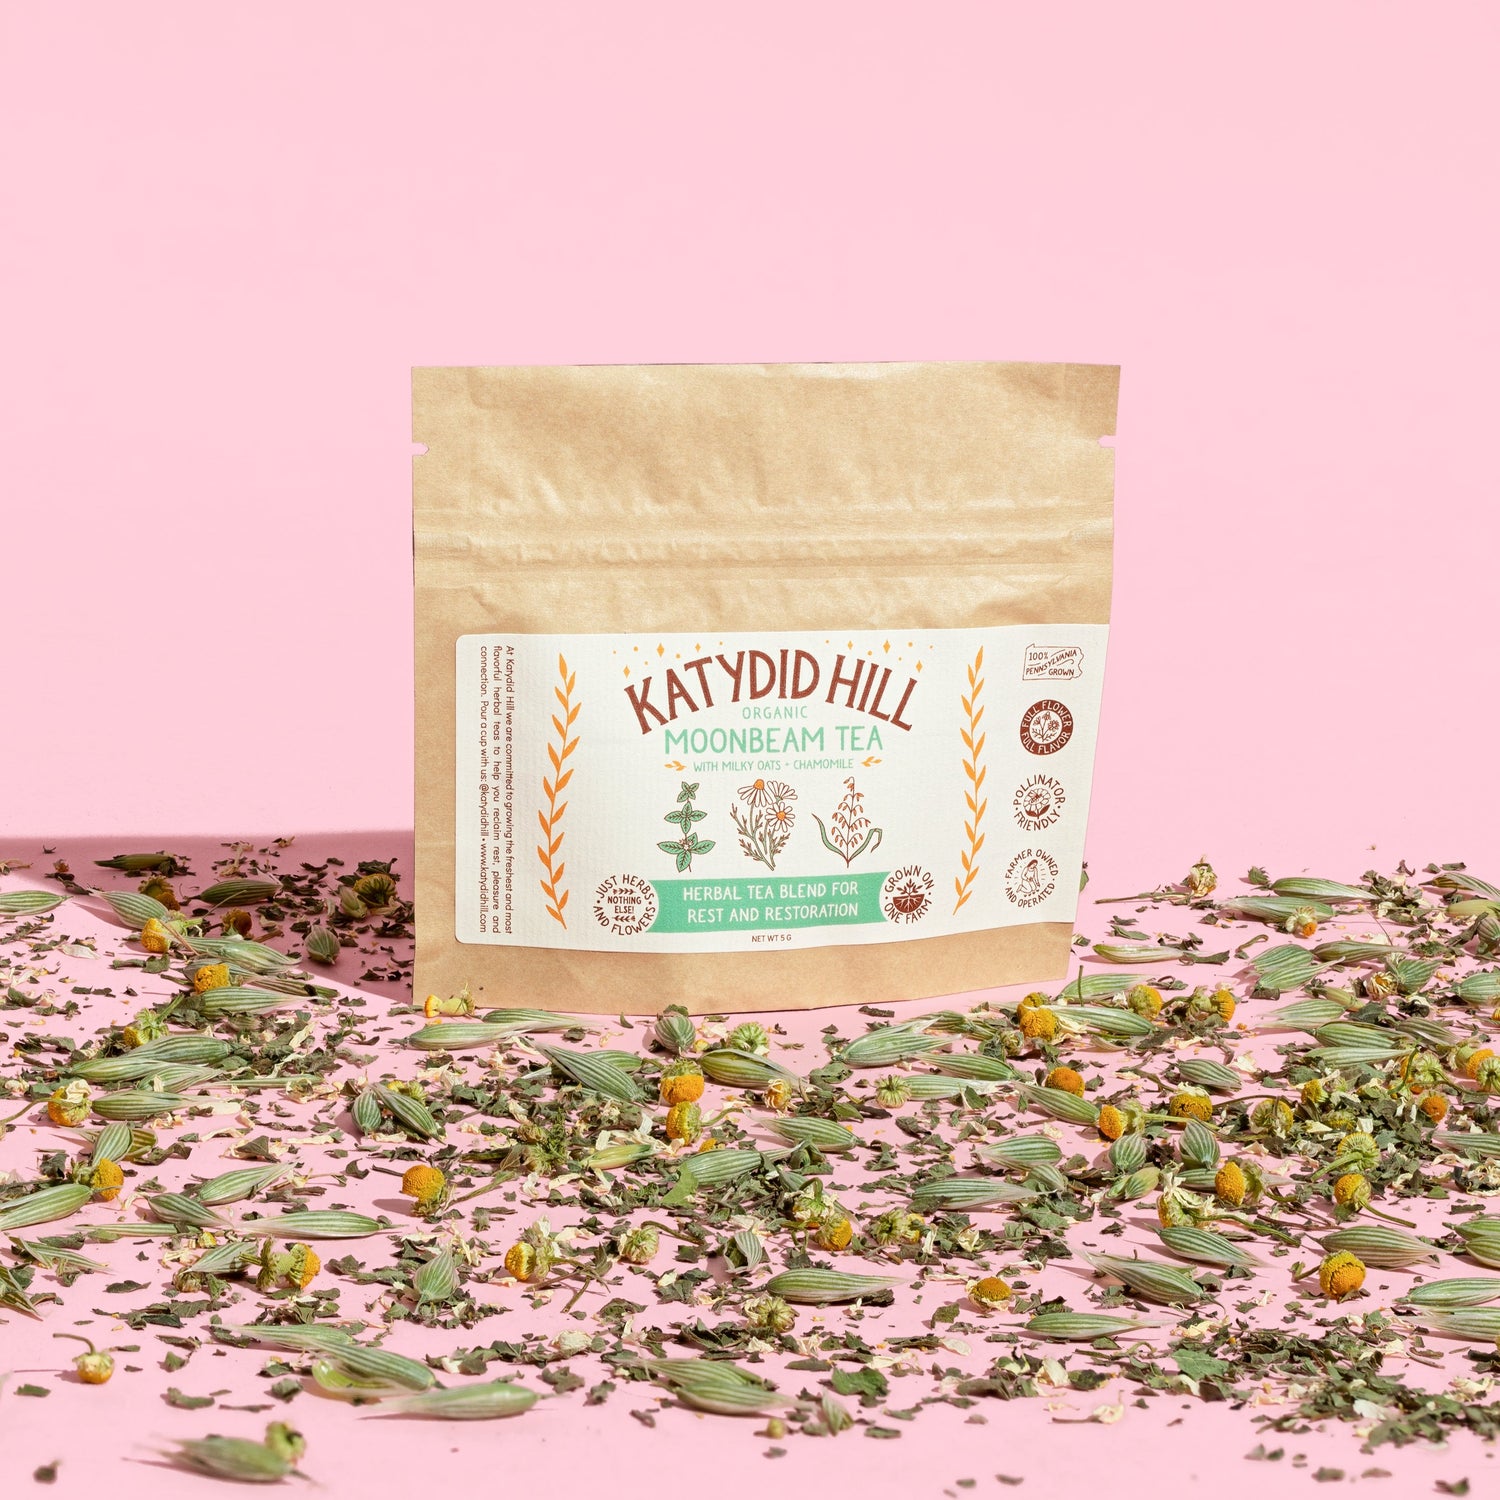 moonbeam tea sample pack with loose herbs on pink background